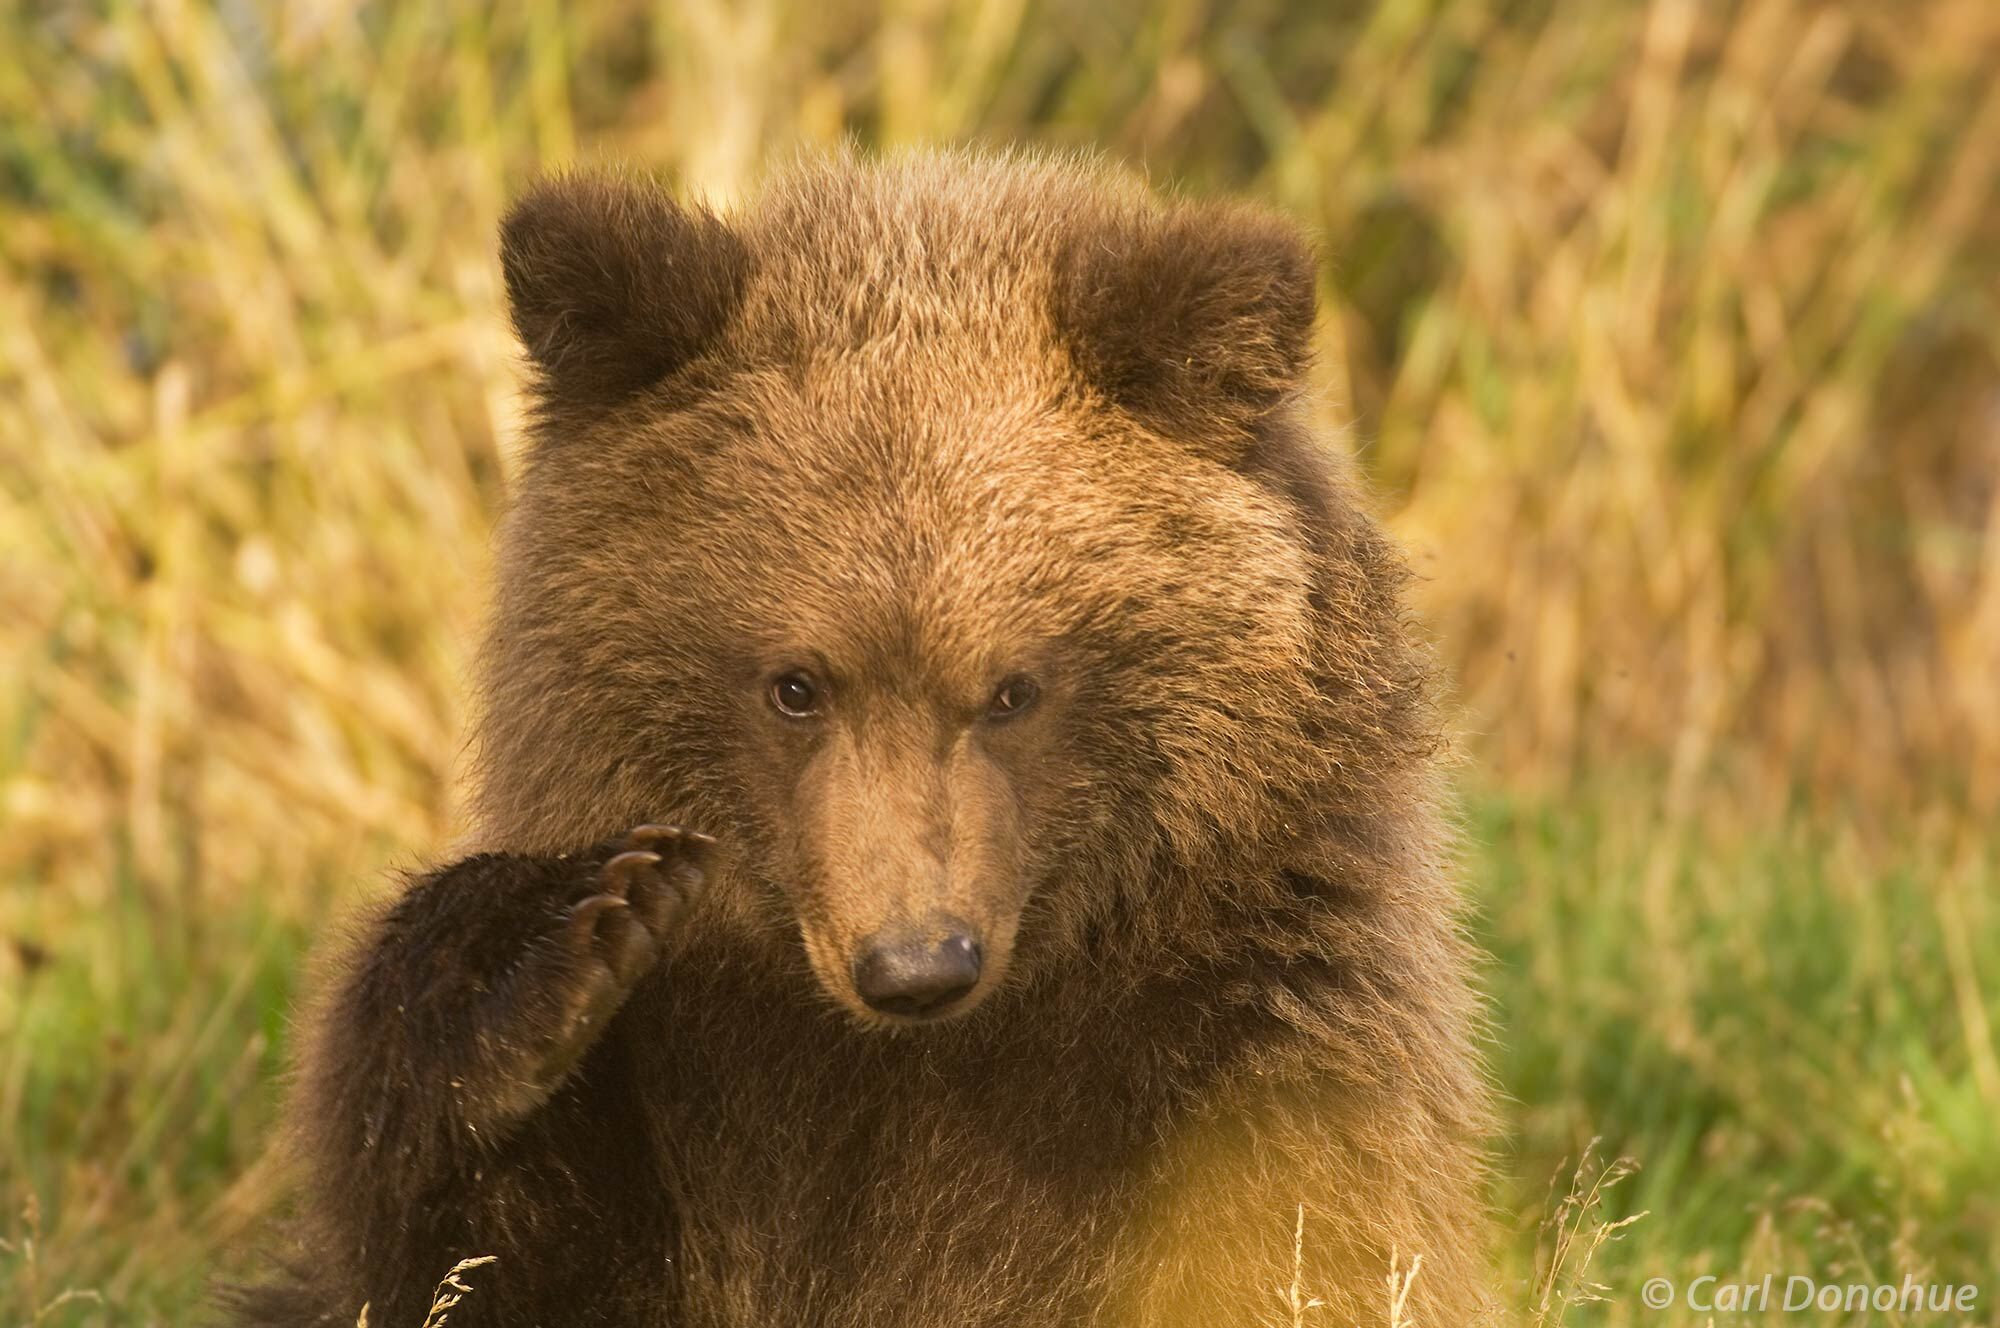 A young grizzly bear cub, or brown bear, near Brooks River, Katmai National Park, Alaska. Ursus arctos.